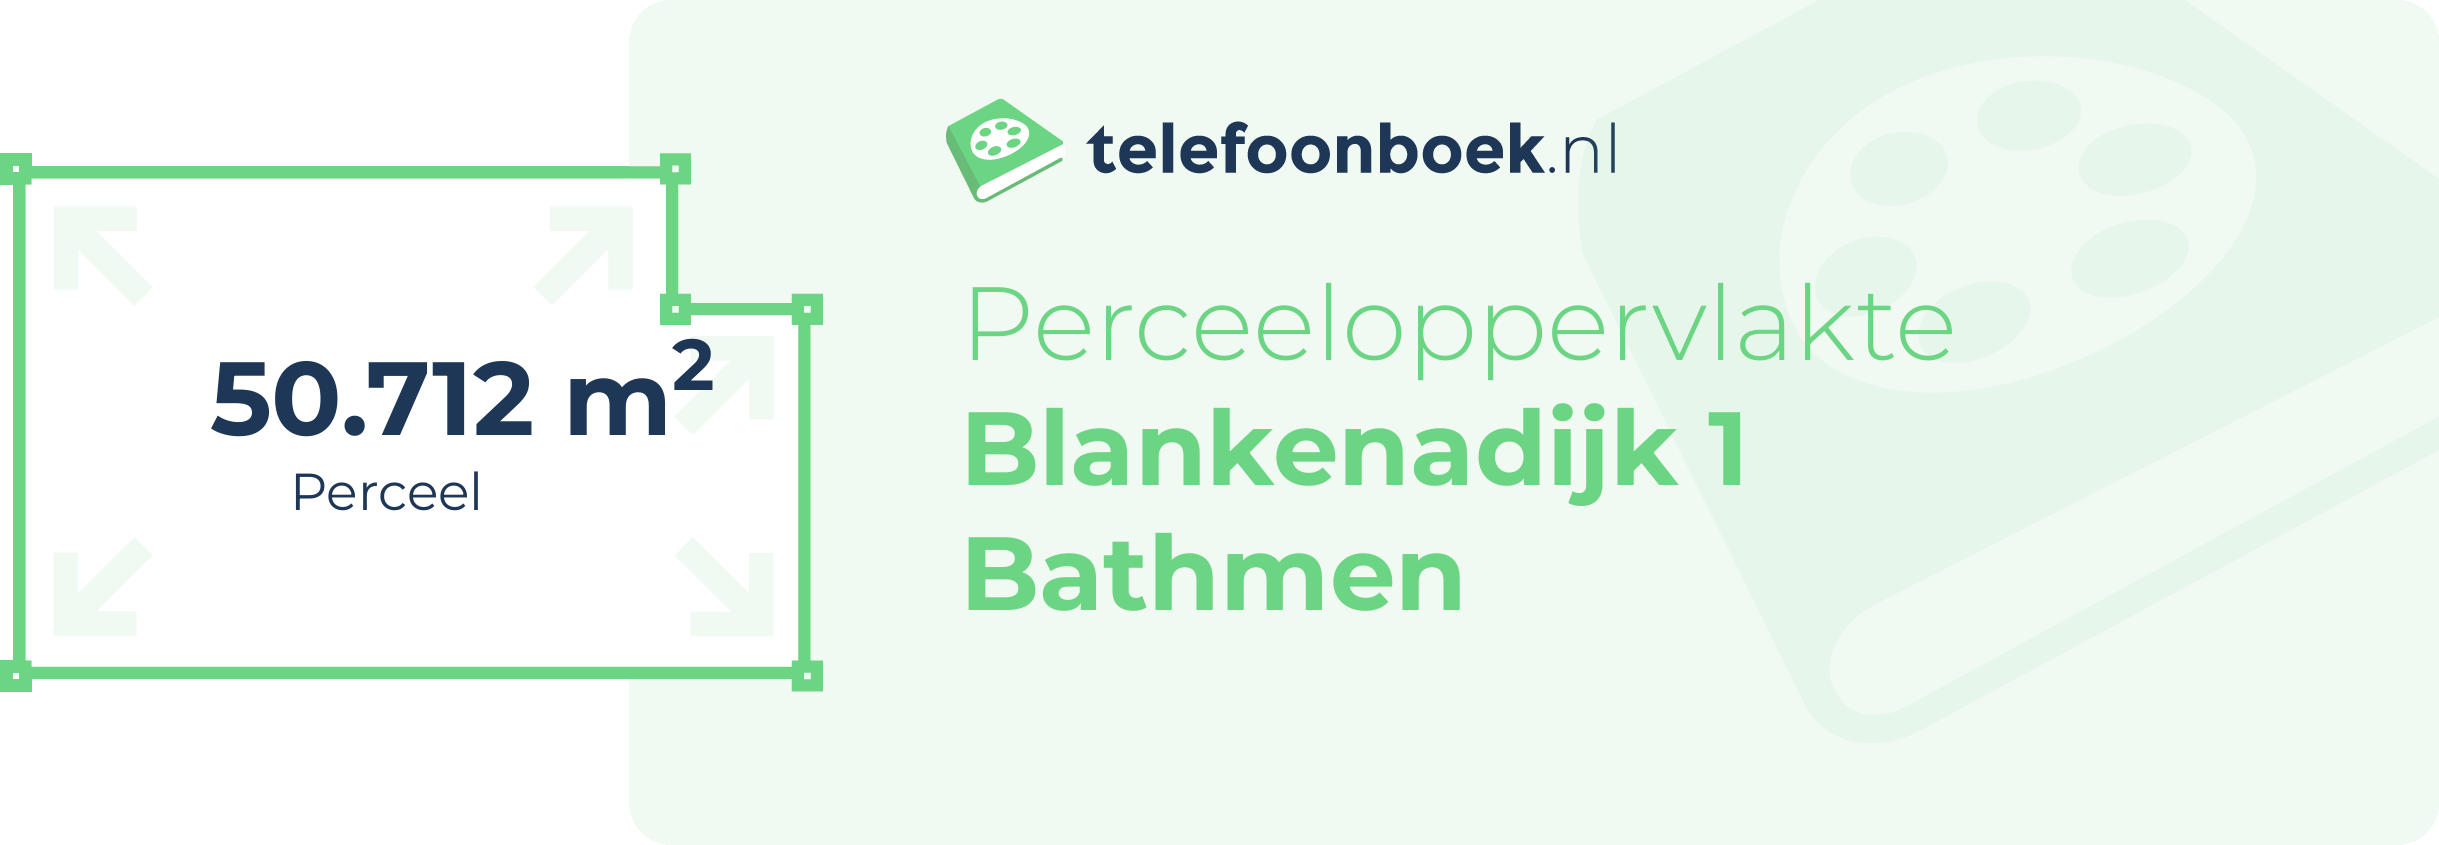 Perceeloppervlakte Blankenadijk 1 Bathmen